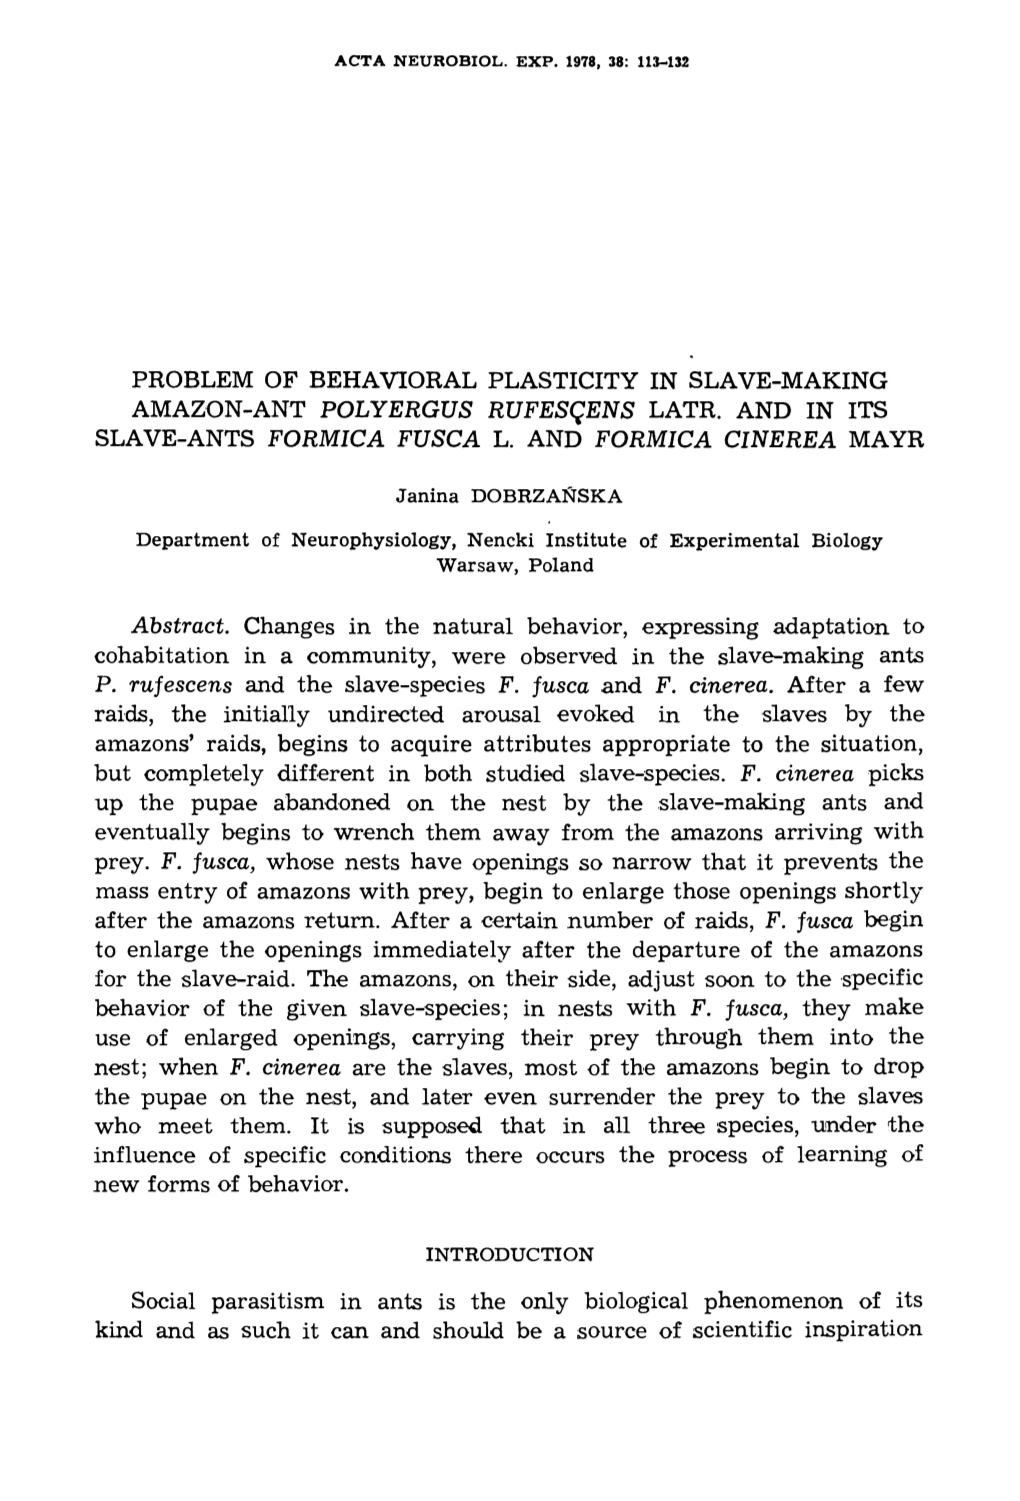 Problem of Behavioral Plasticity in Slave-Making Amazon-Ant Polyergus Rufescens Latr